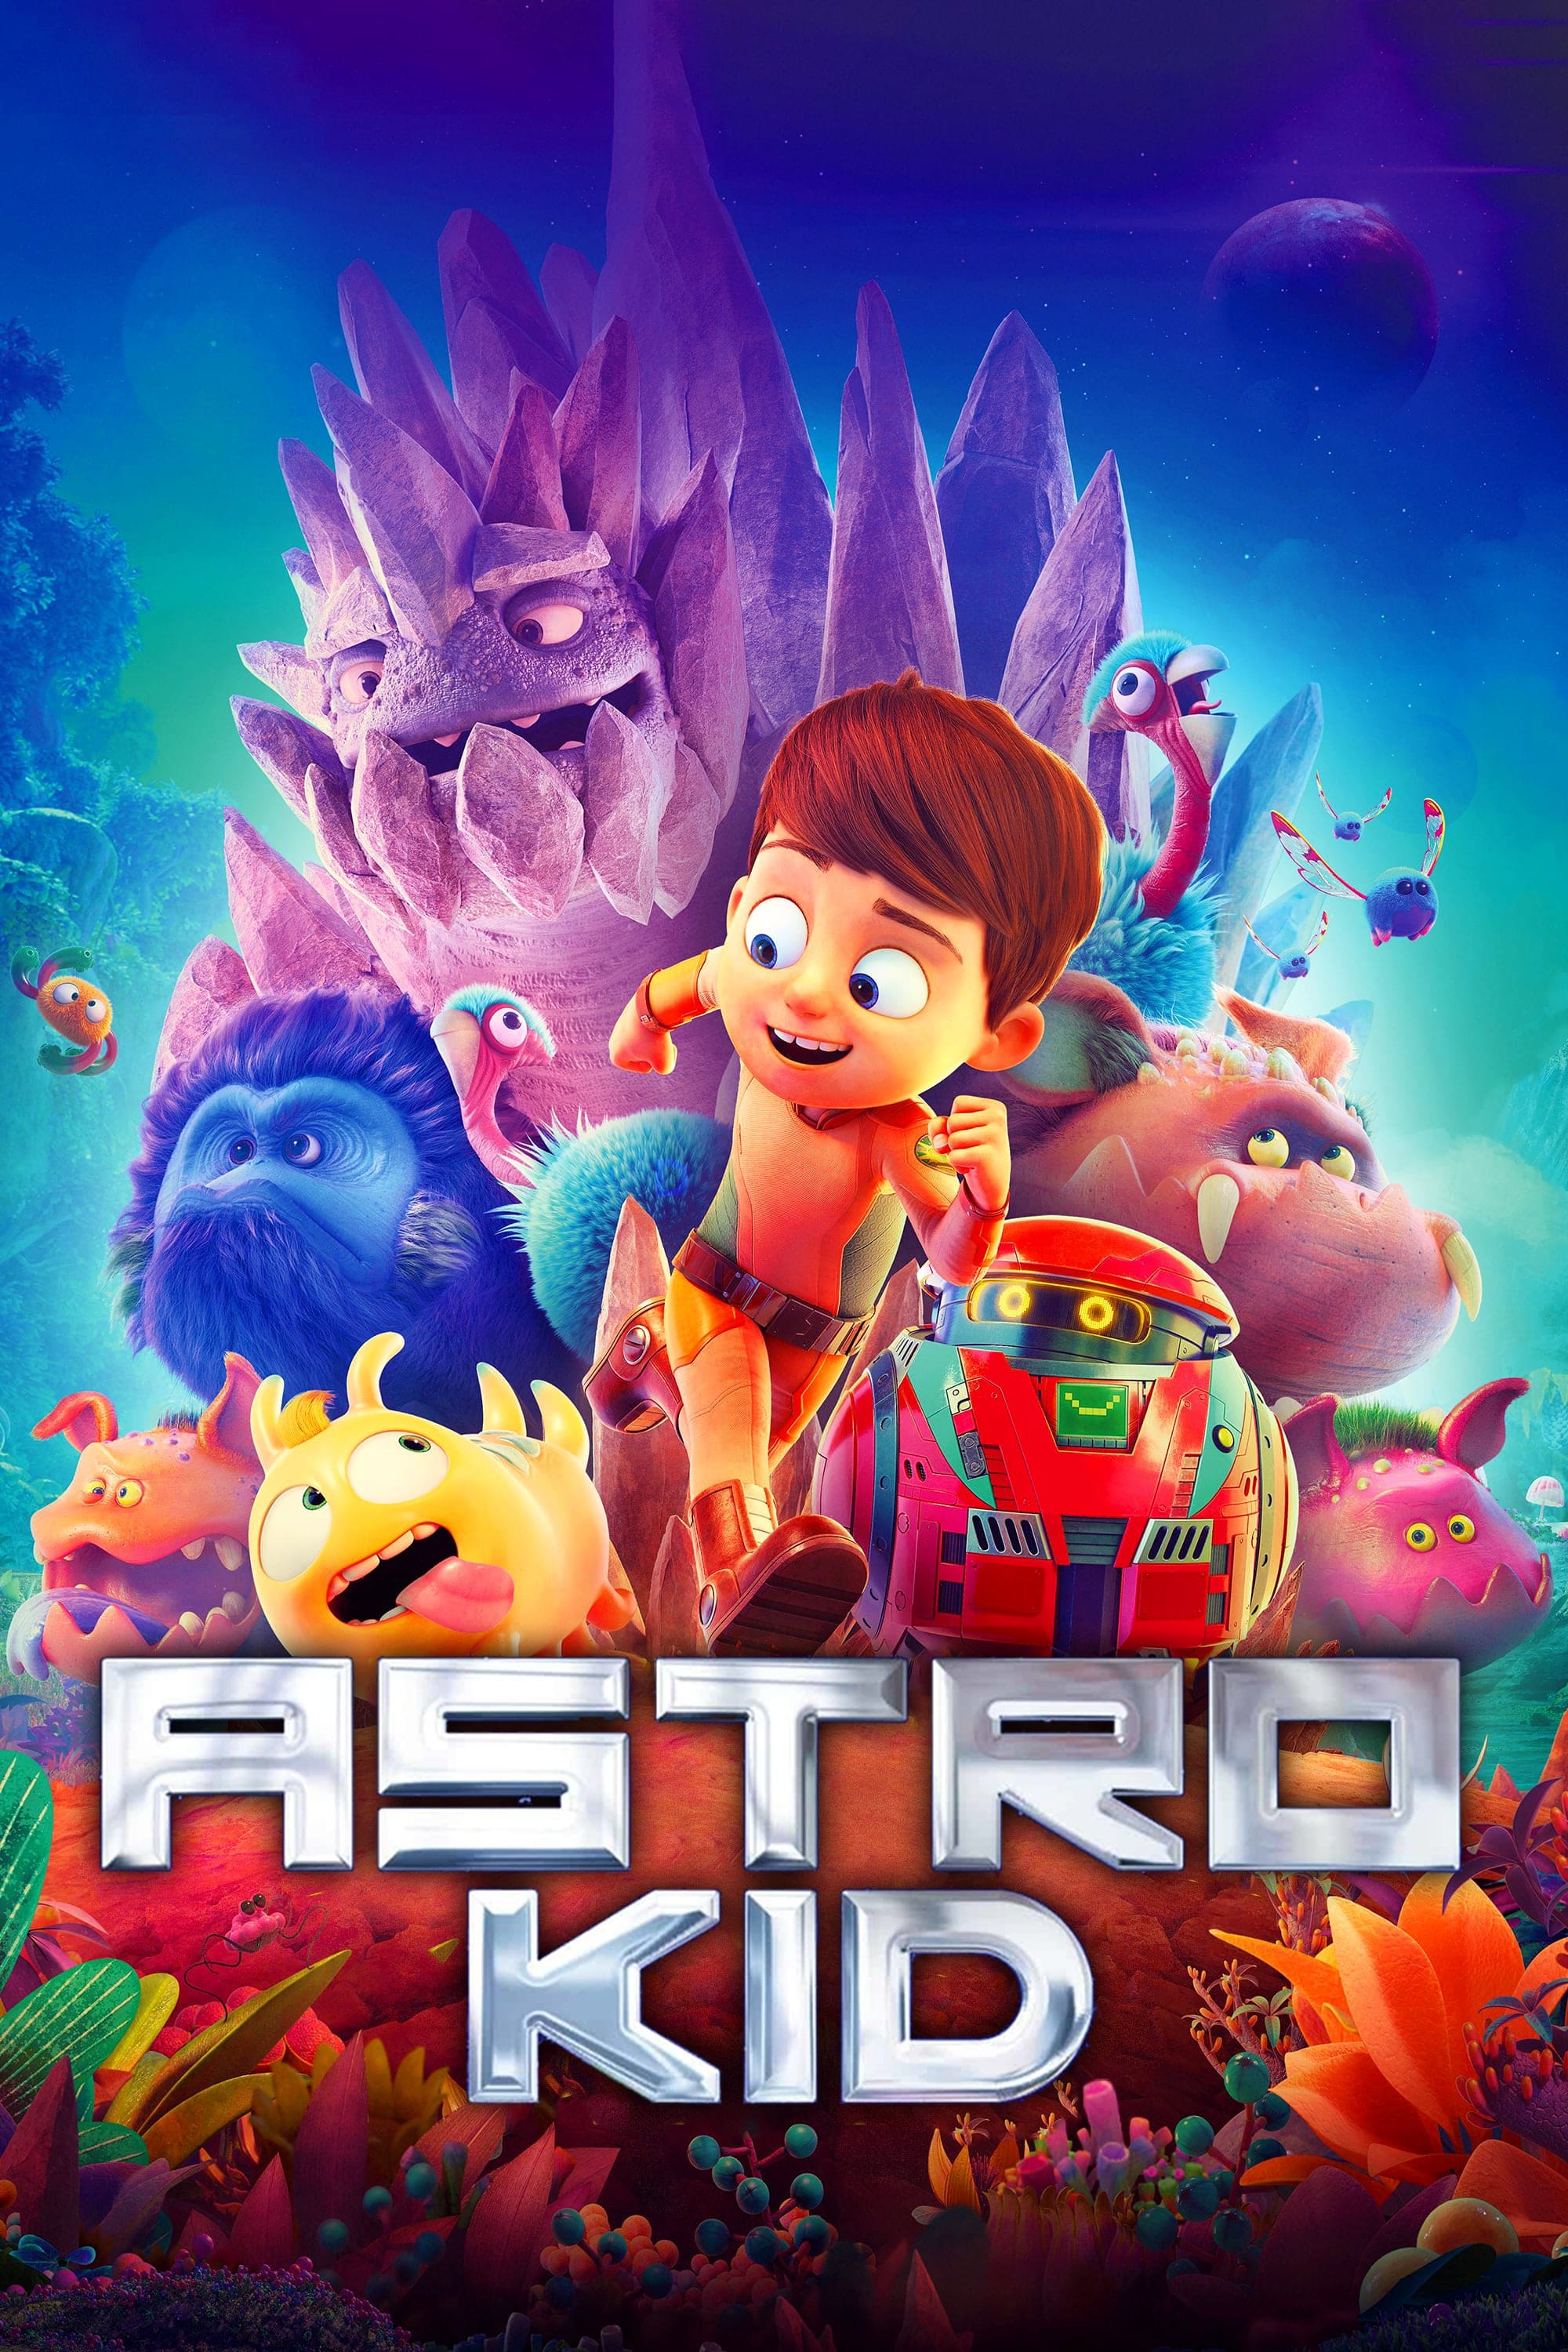 Astro Kid  - Assistir Astro Kid Dublado Online grátis